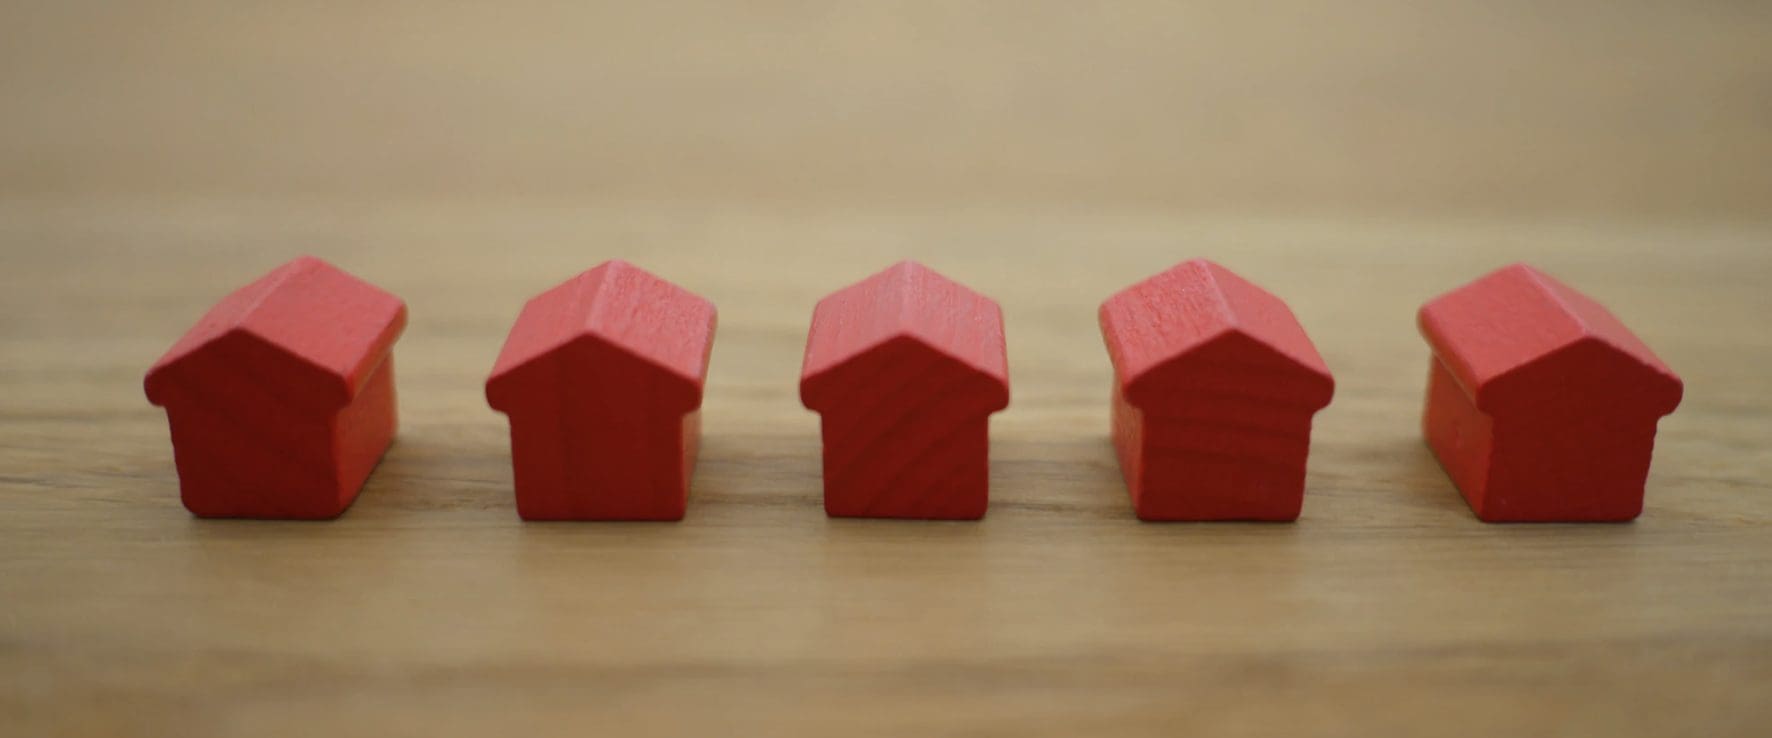 House Figurines Mortgage